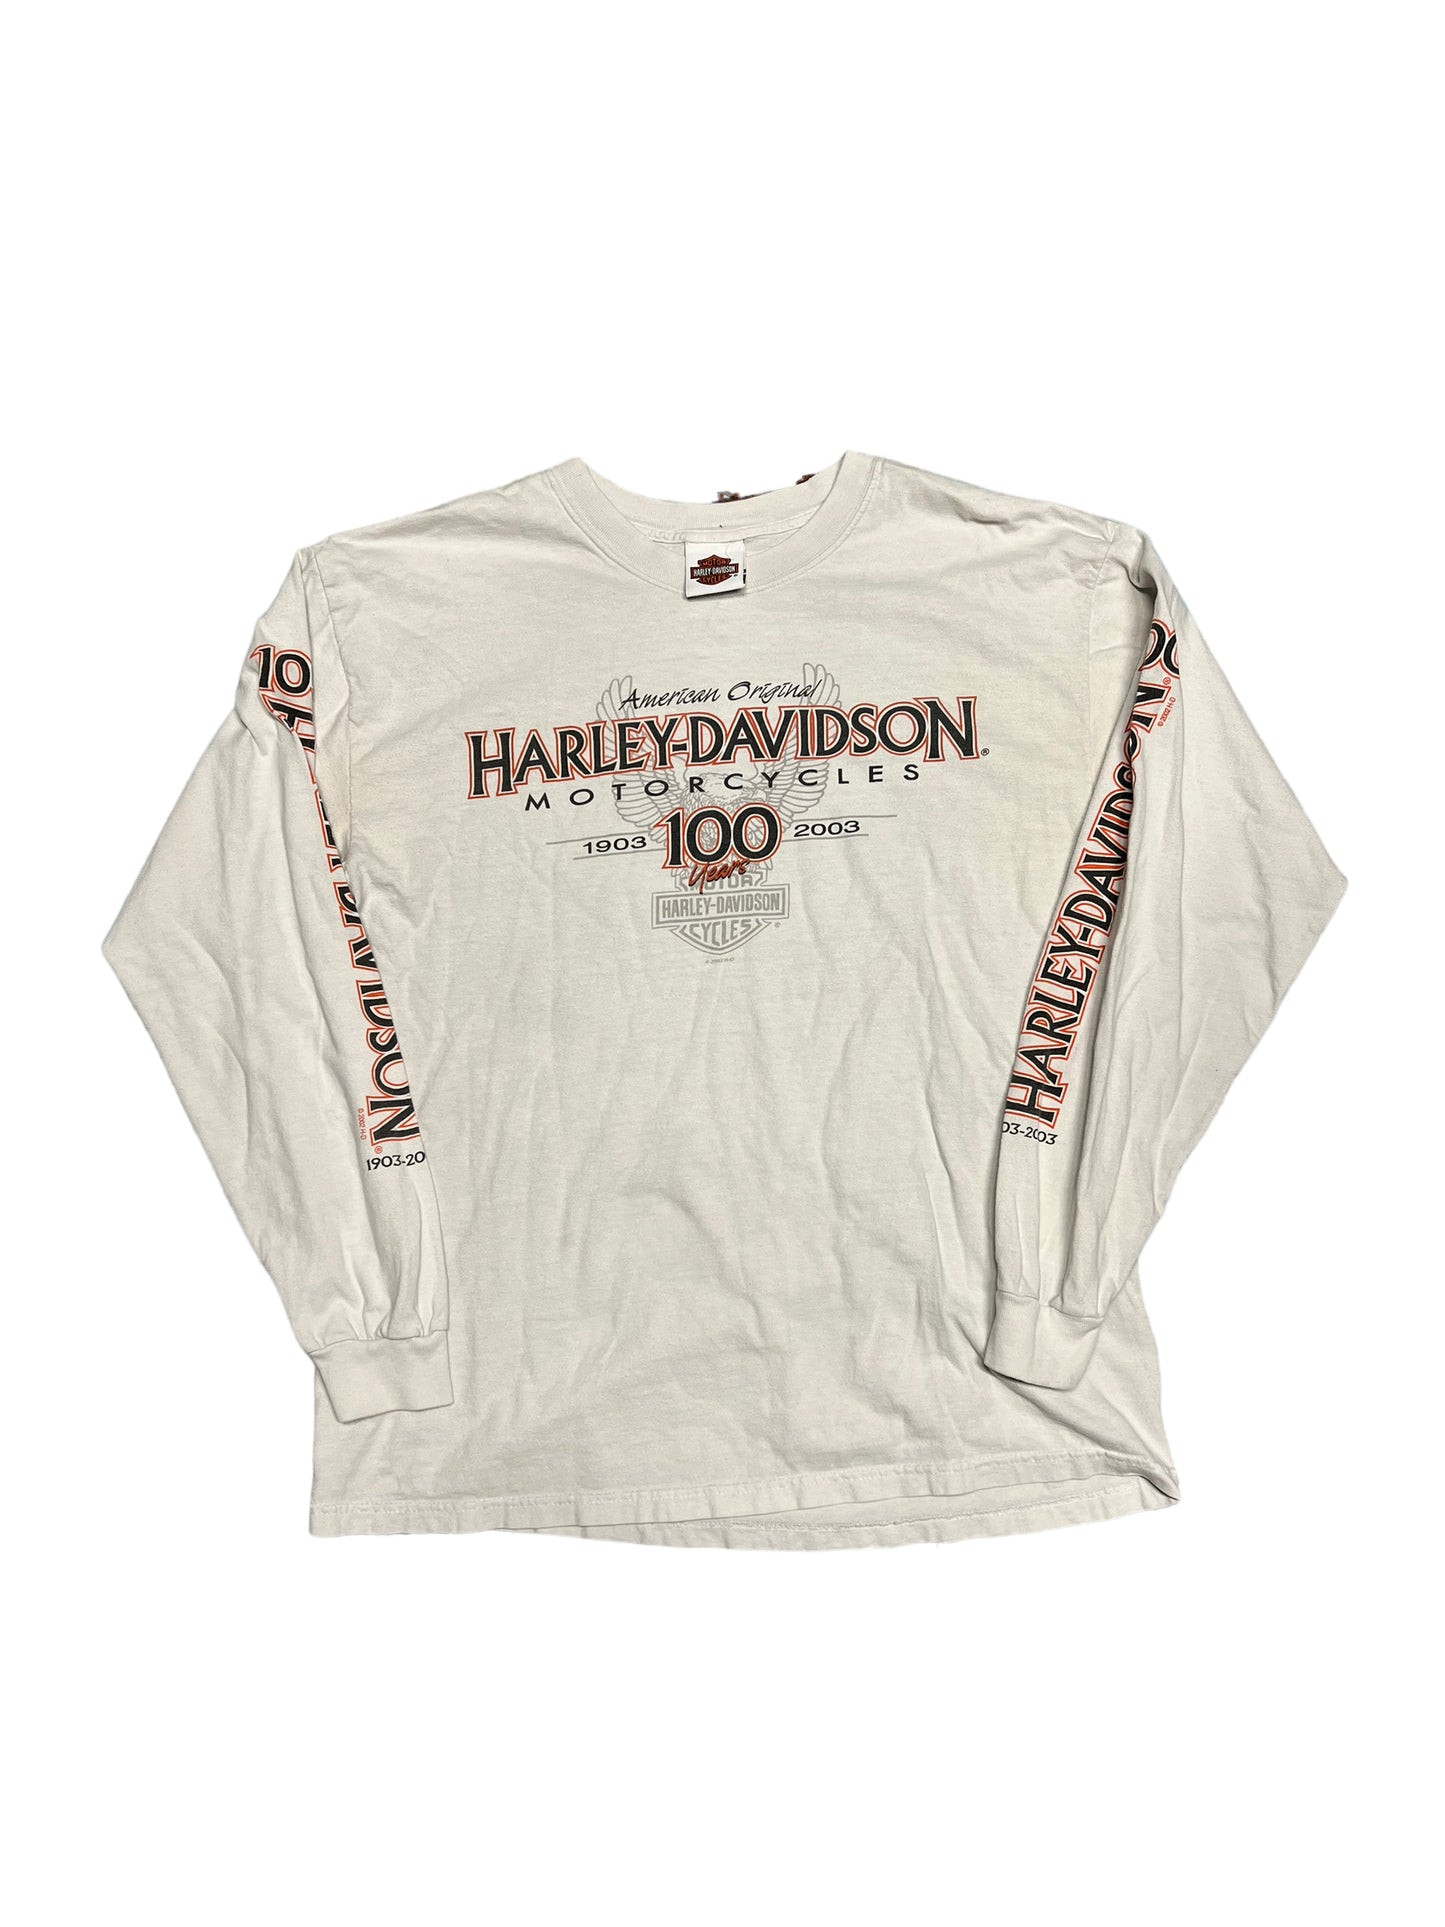 Vintage 2002 Butler PA Harley Davidson Shirt